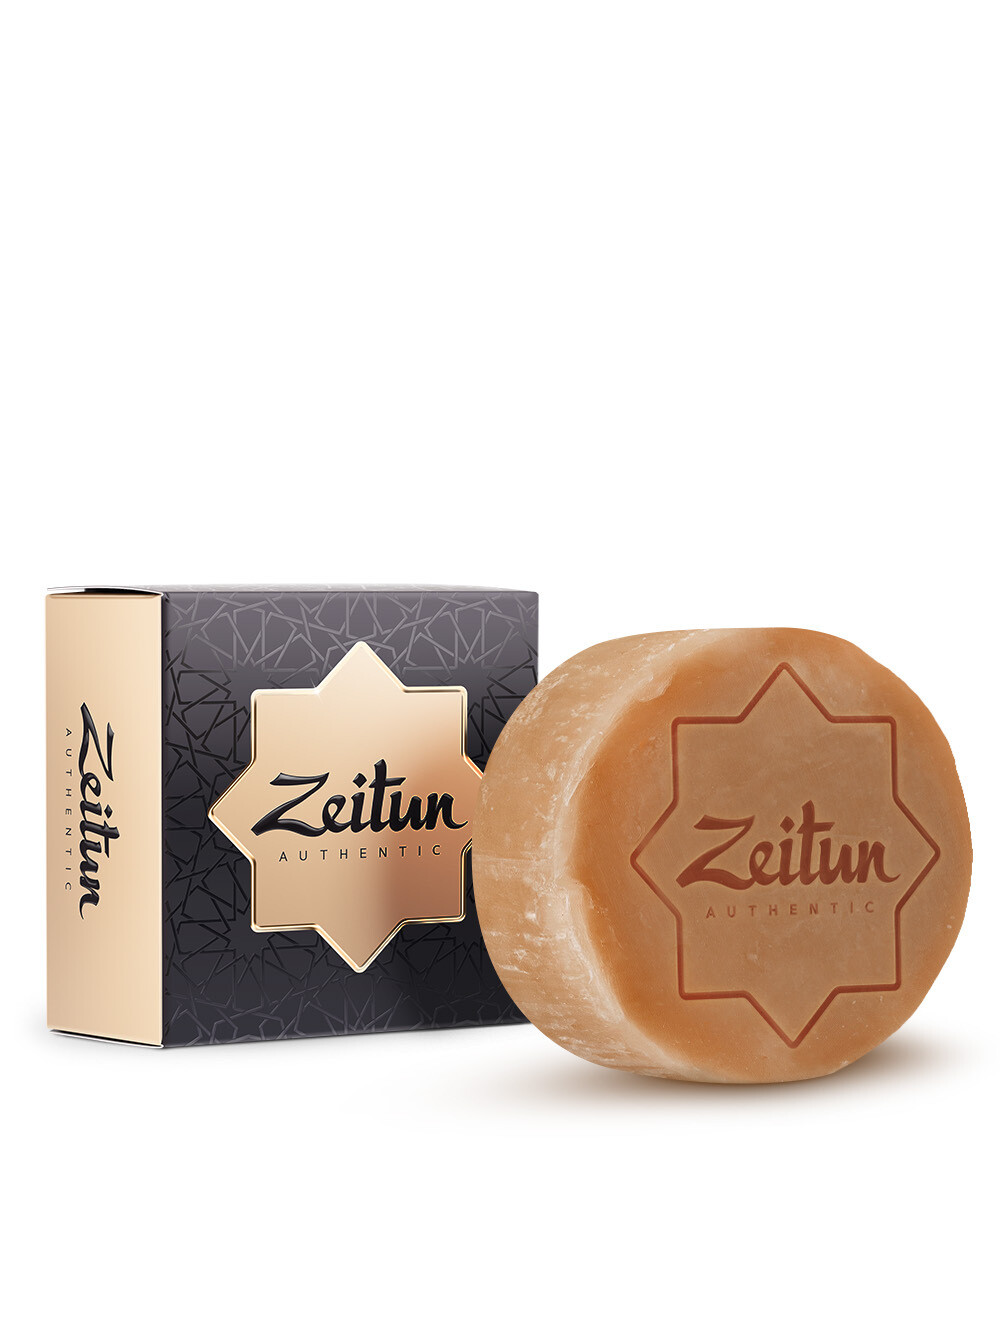 Zeitun Aleppo Extra Soap Pine Tar for Dandruff and Problem Skin Treatment  мыло экстра Zeitun "Сосновый деготь" против акне и перхоти